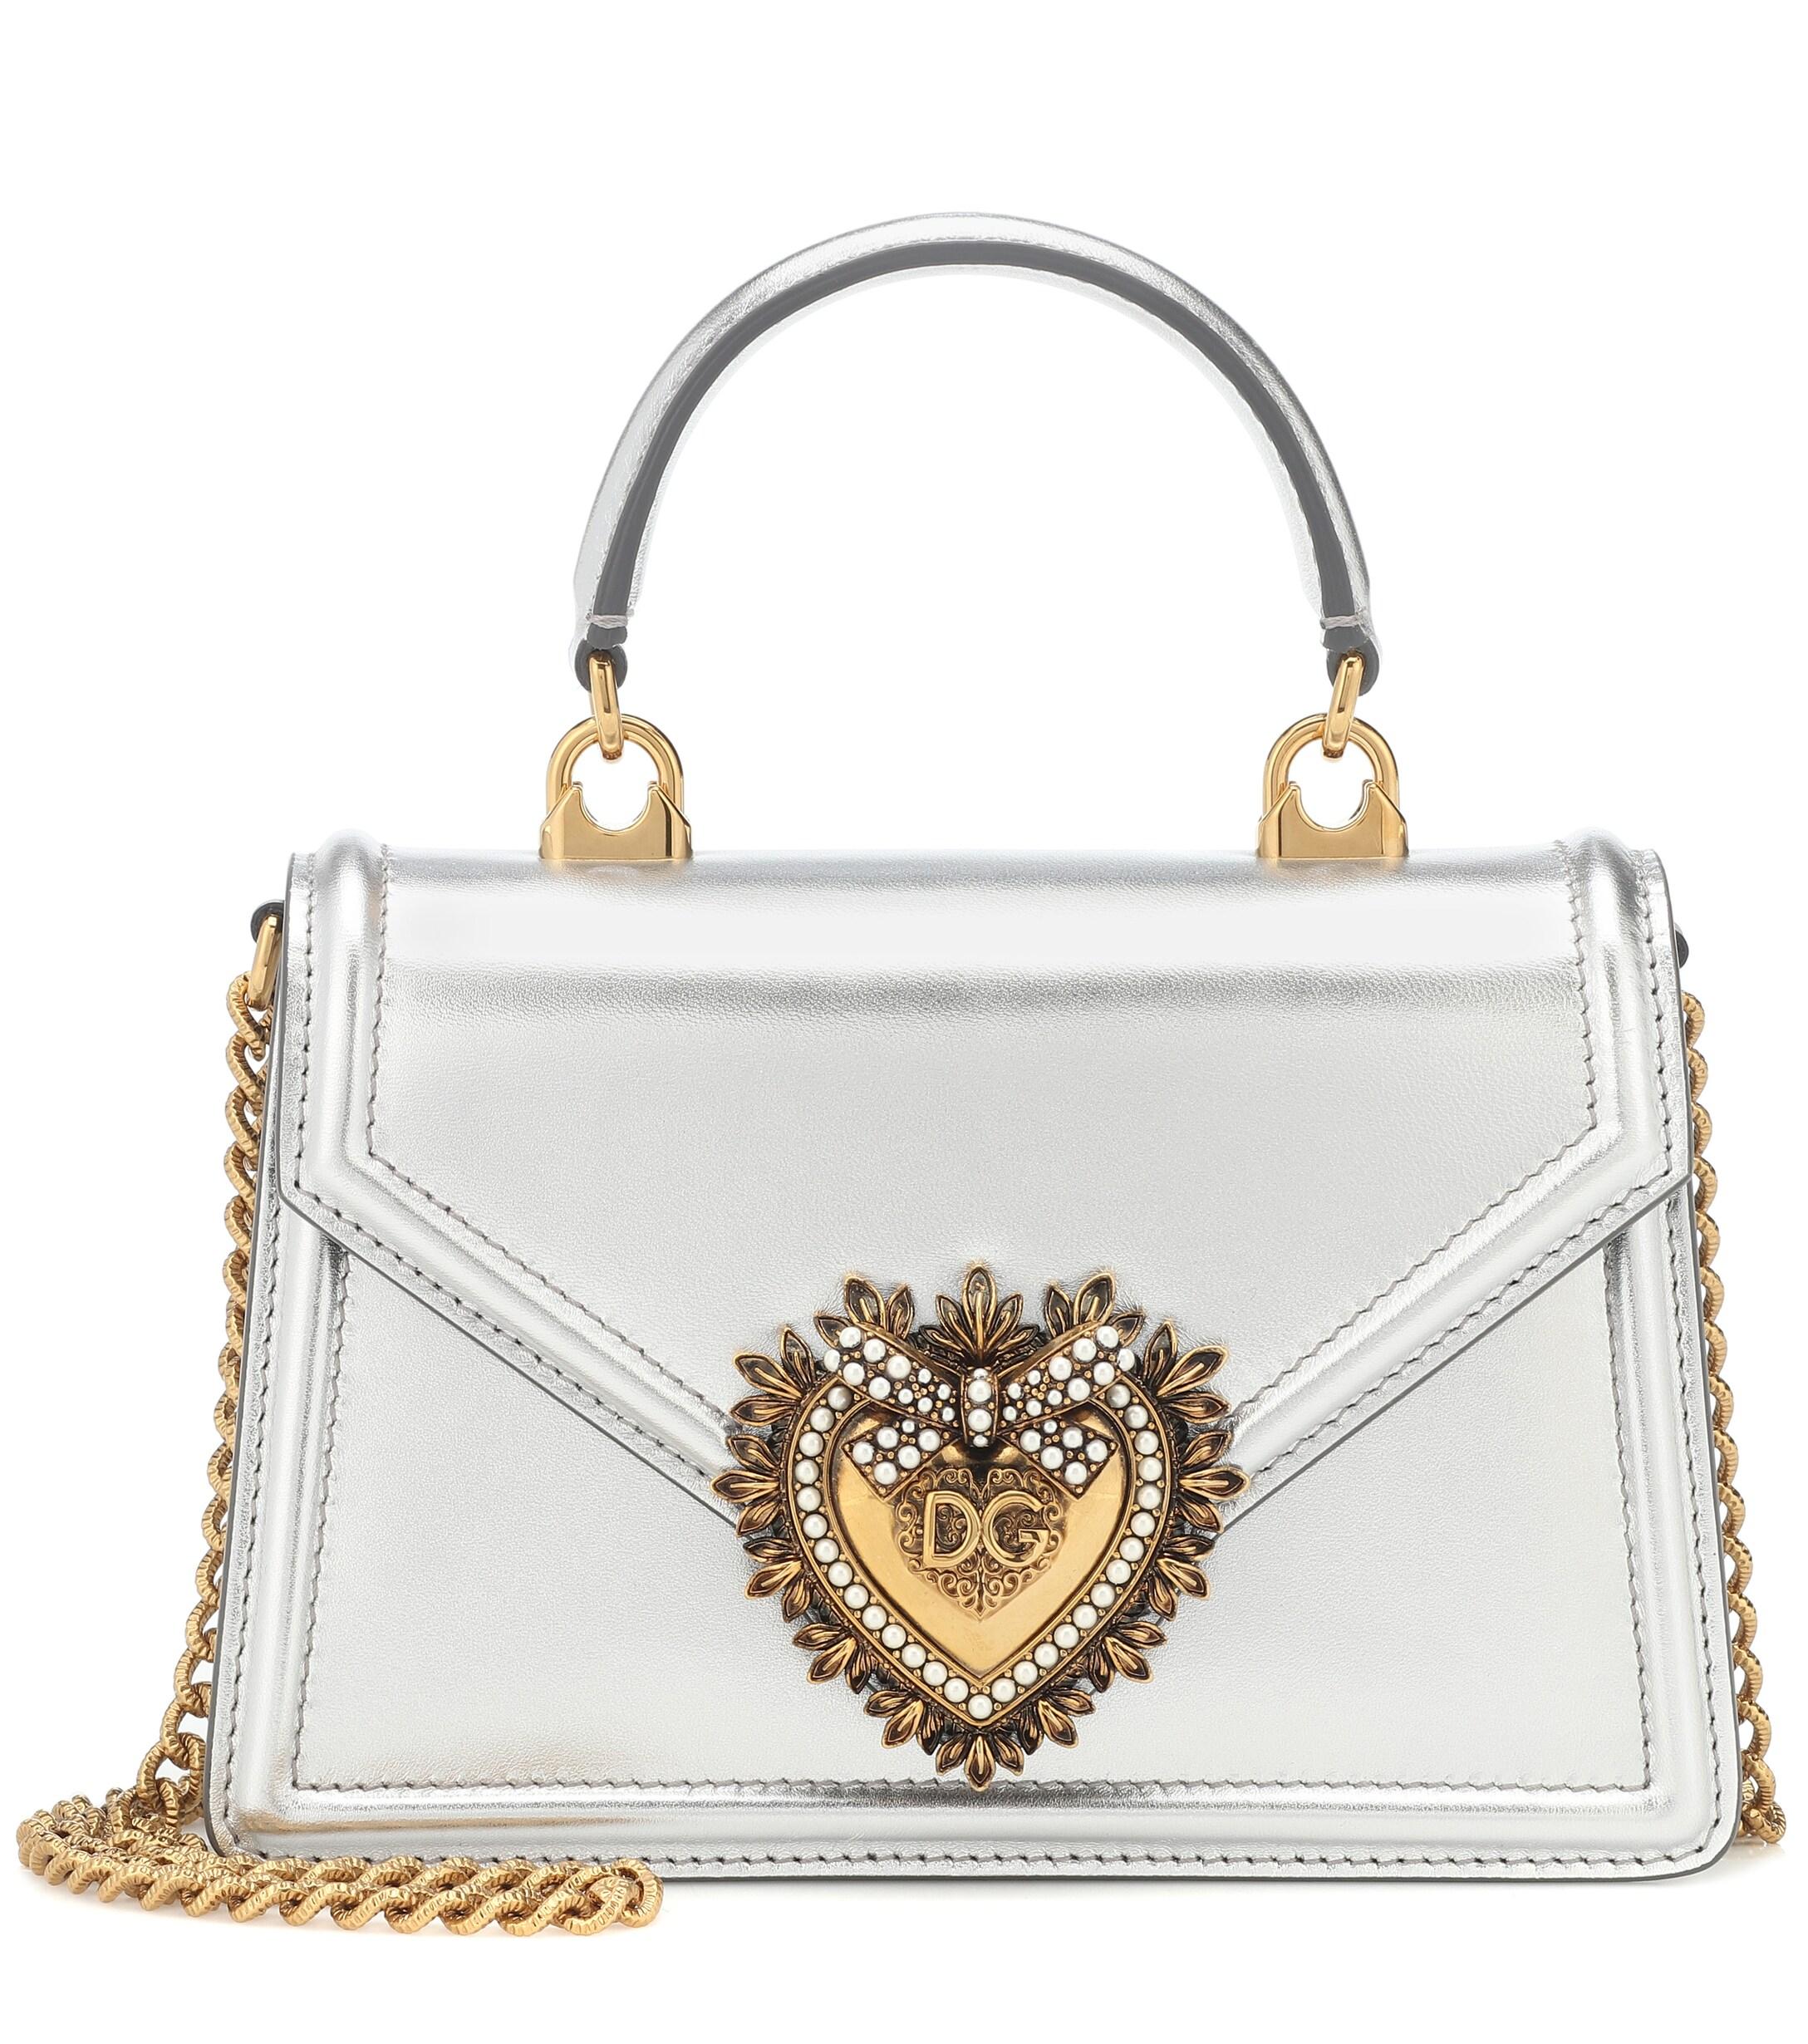 Dolce & Gabbana Devotion Small Leather Shoulder Bag in Silver (Metallic